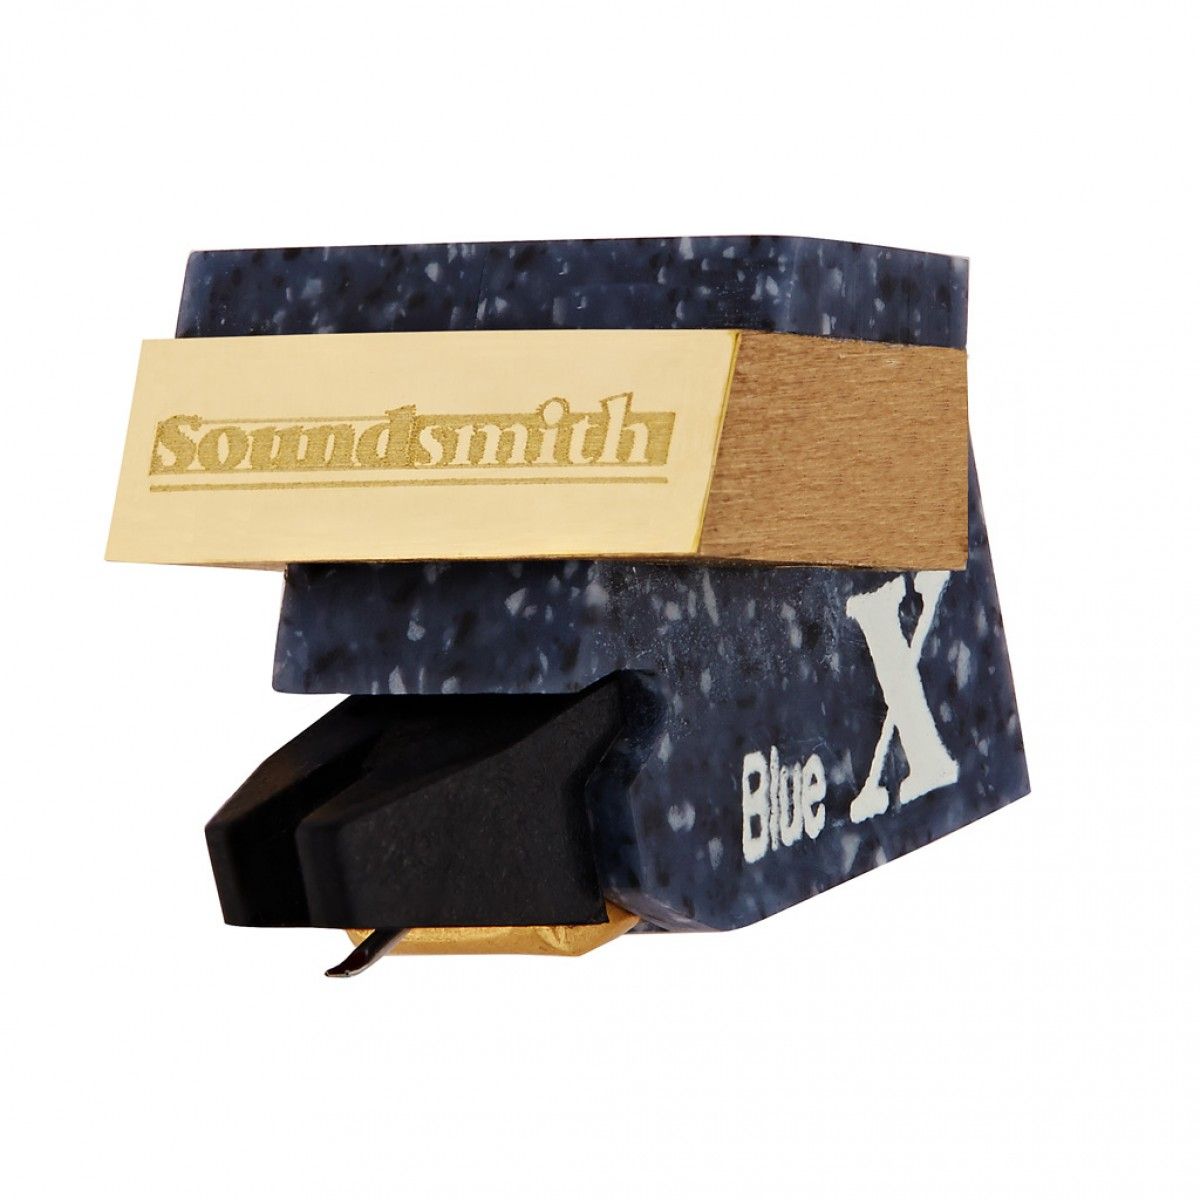 Soundsmith Irox Blue